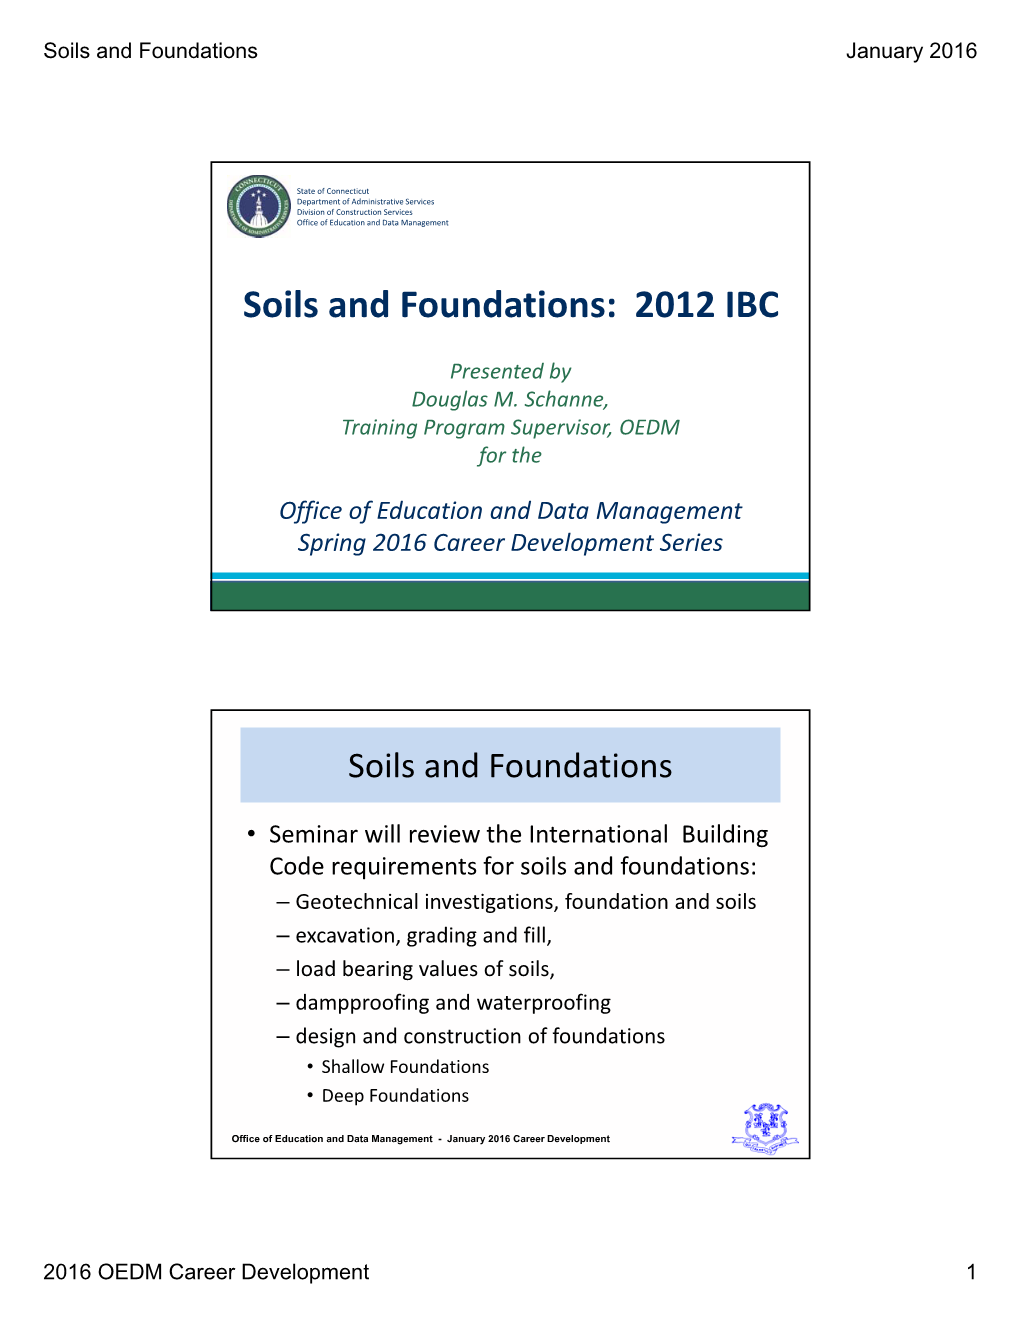 Soils and Foundations: 2012 IBC